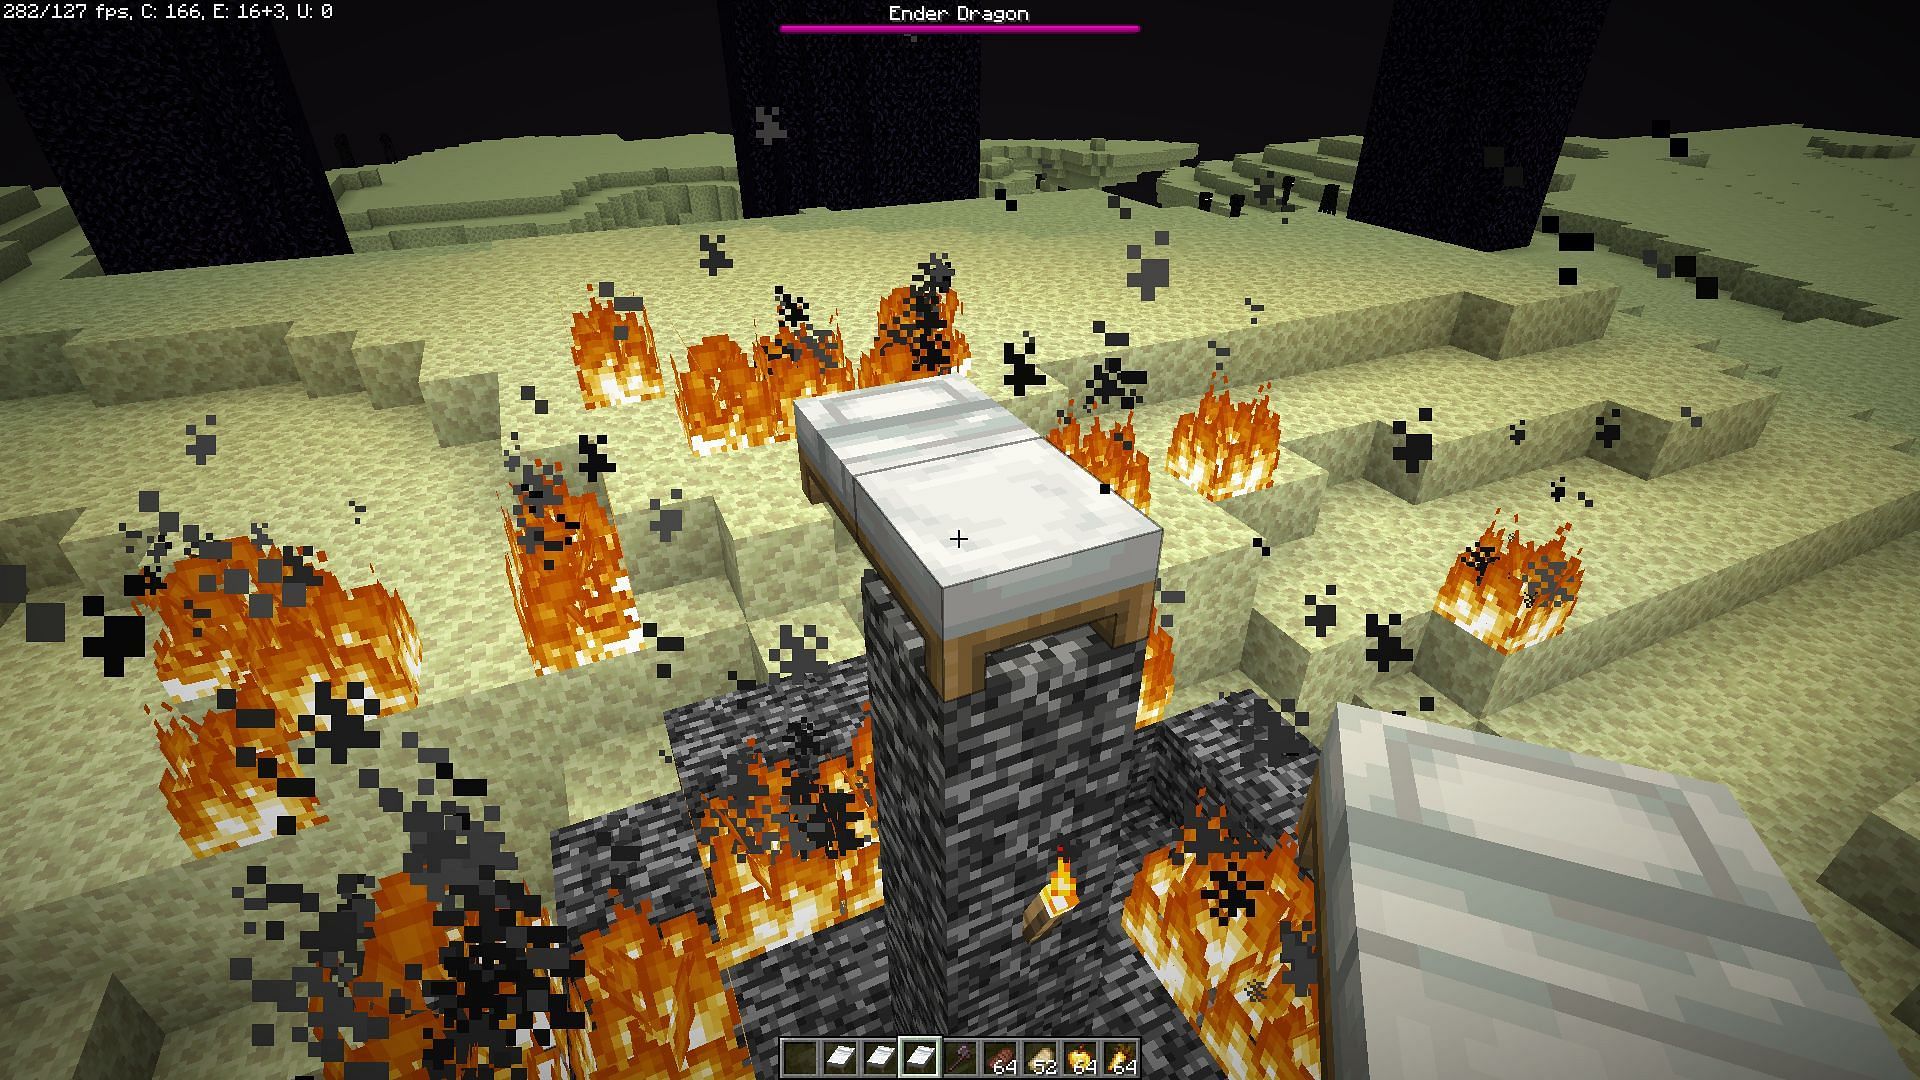 Beds explosion (Image via Minecraft)